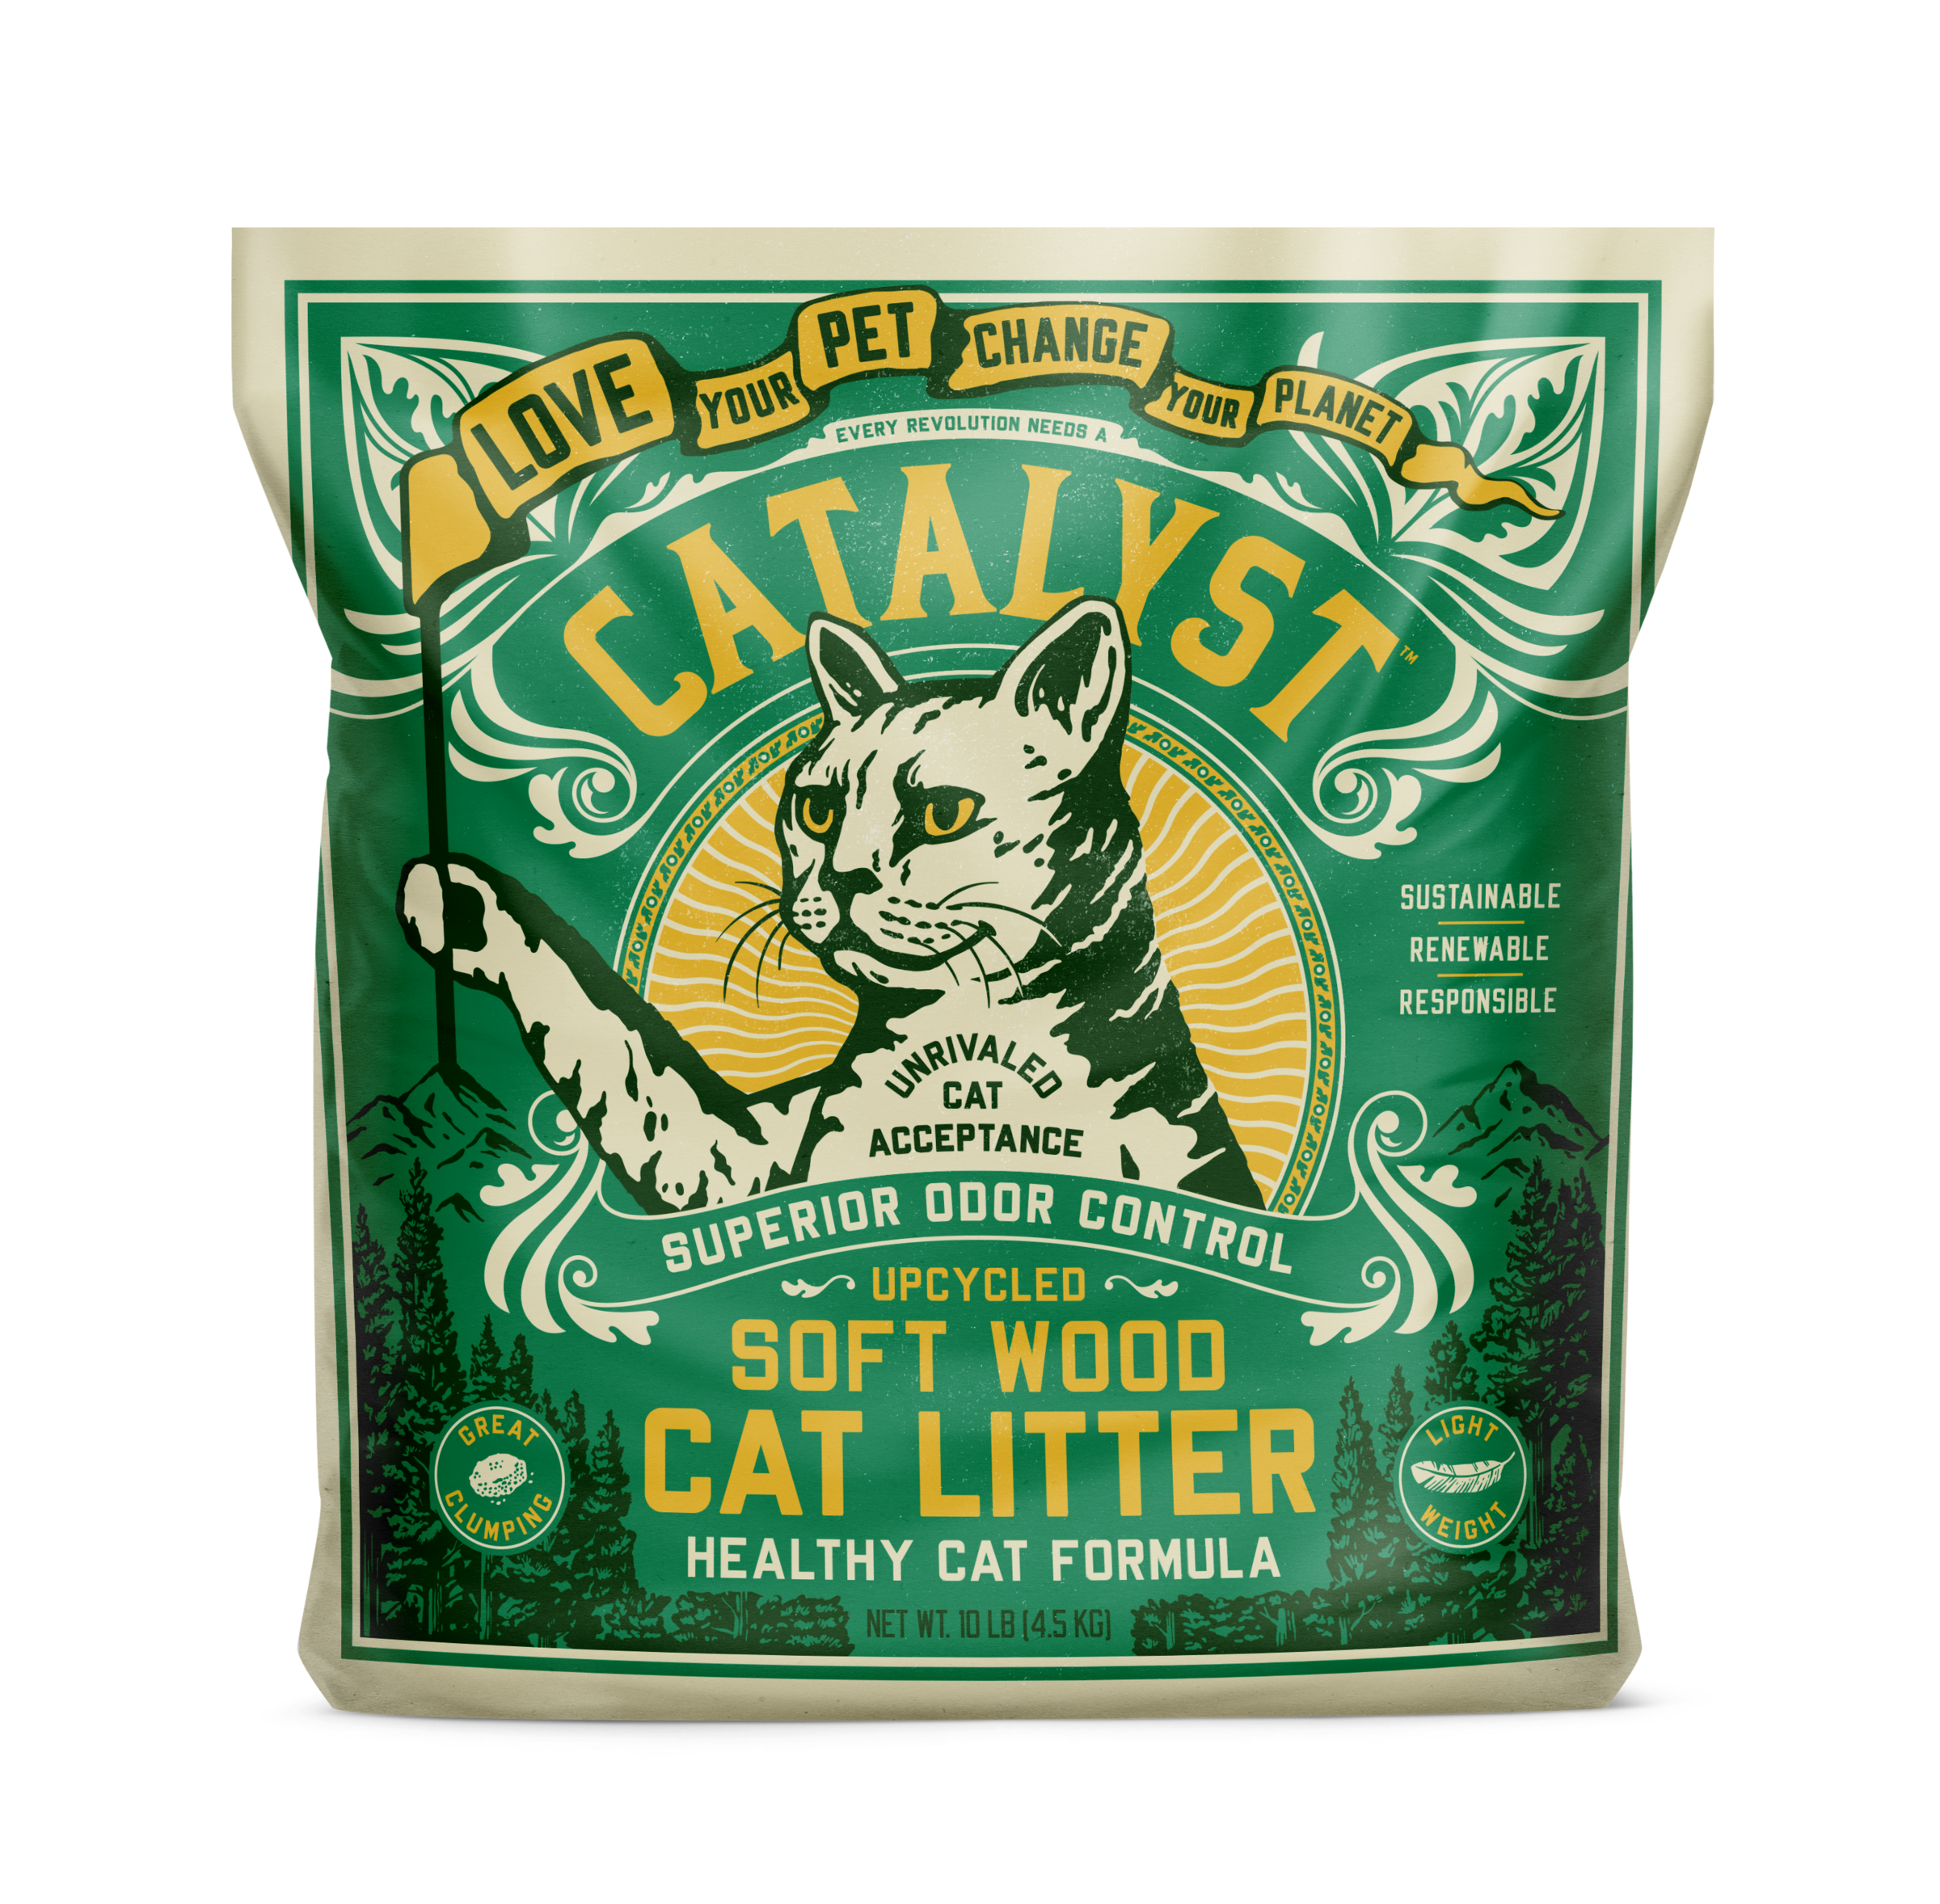 Displaying Catalyst best cat litter bag